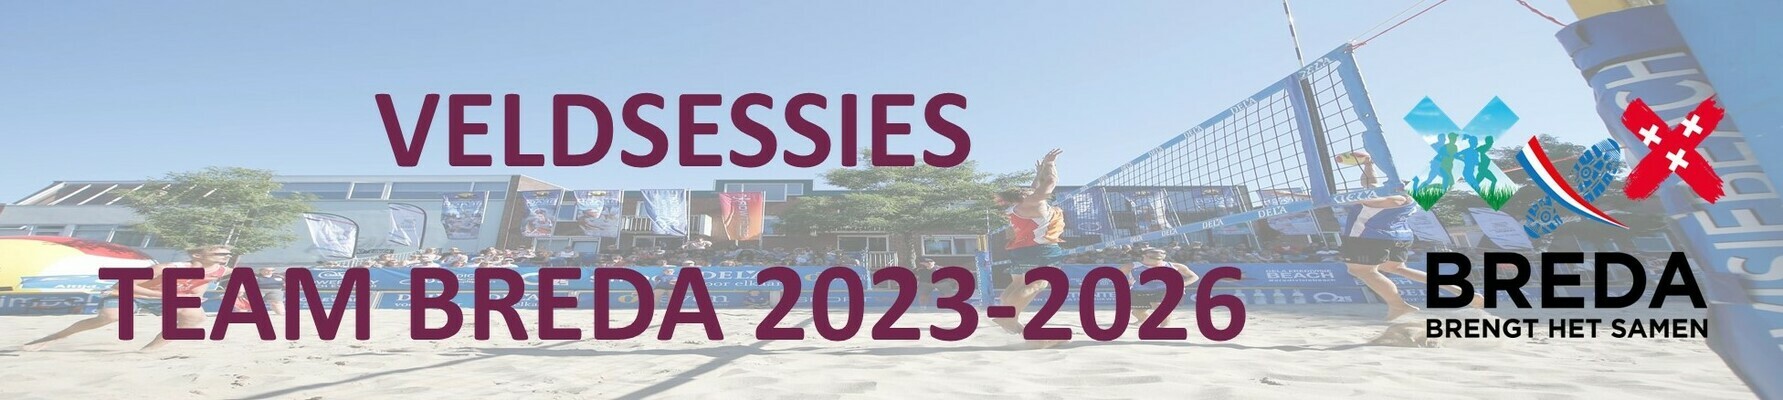 Veldsessies Team Breda 2023-2026